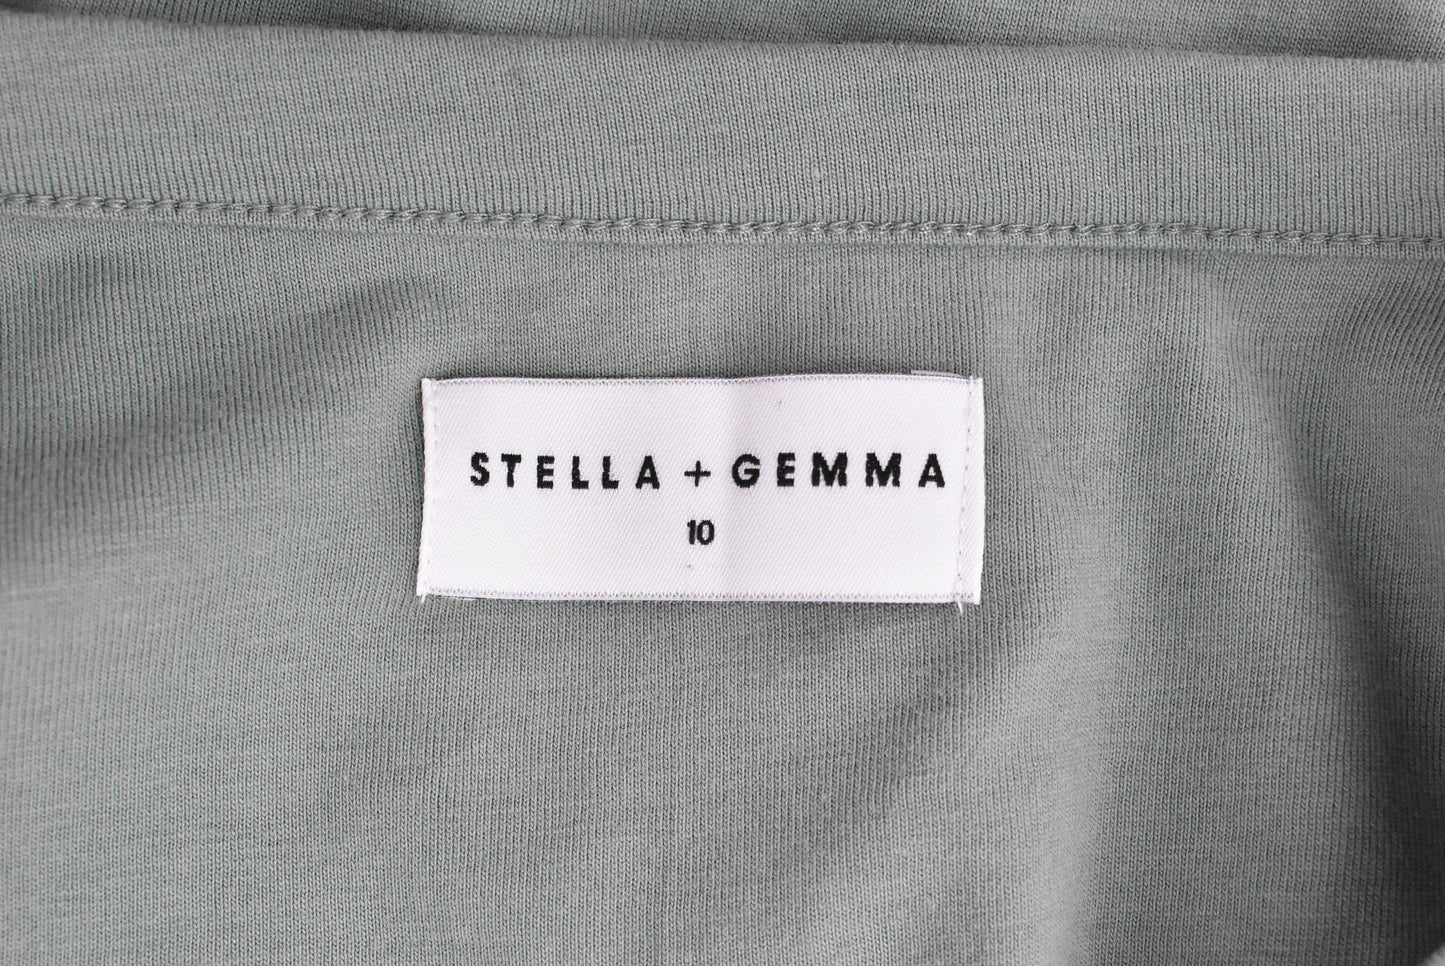 Stella and Gemma long sleeved dress Size 10